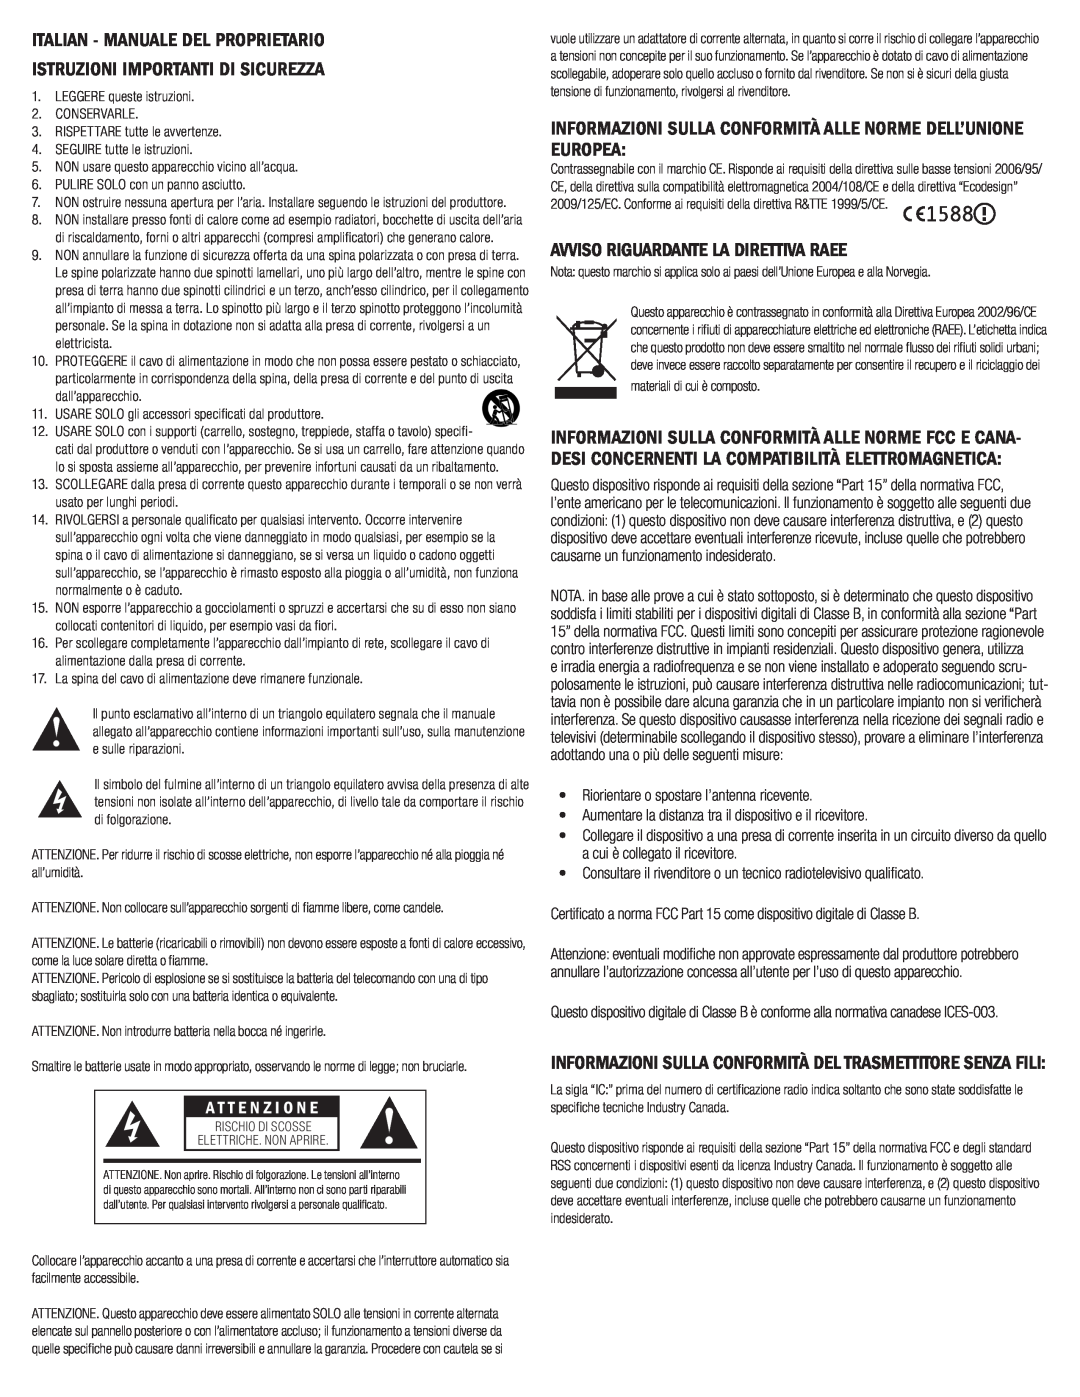 Klipsch G-17 AIR owner manual Italian - Manuale Del Proprietario, Istruzioni Importanti Di Sicurezza, A T T E N Z I O N E 